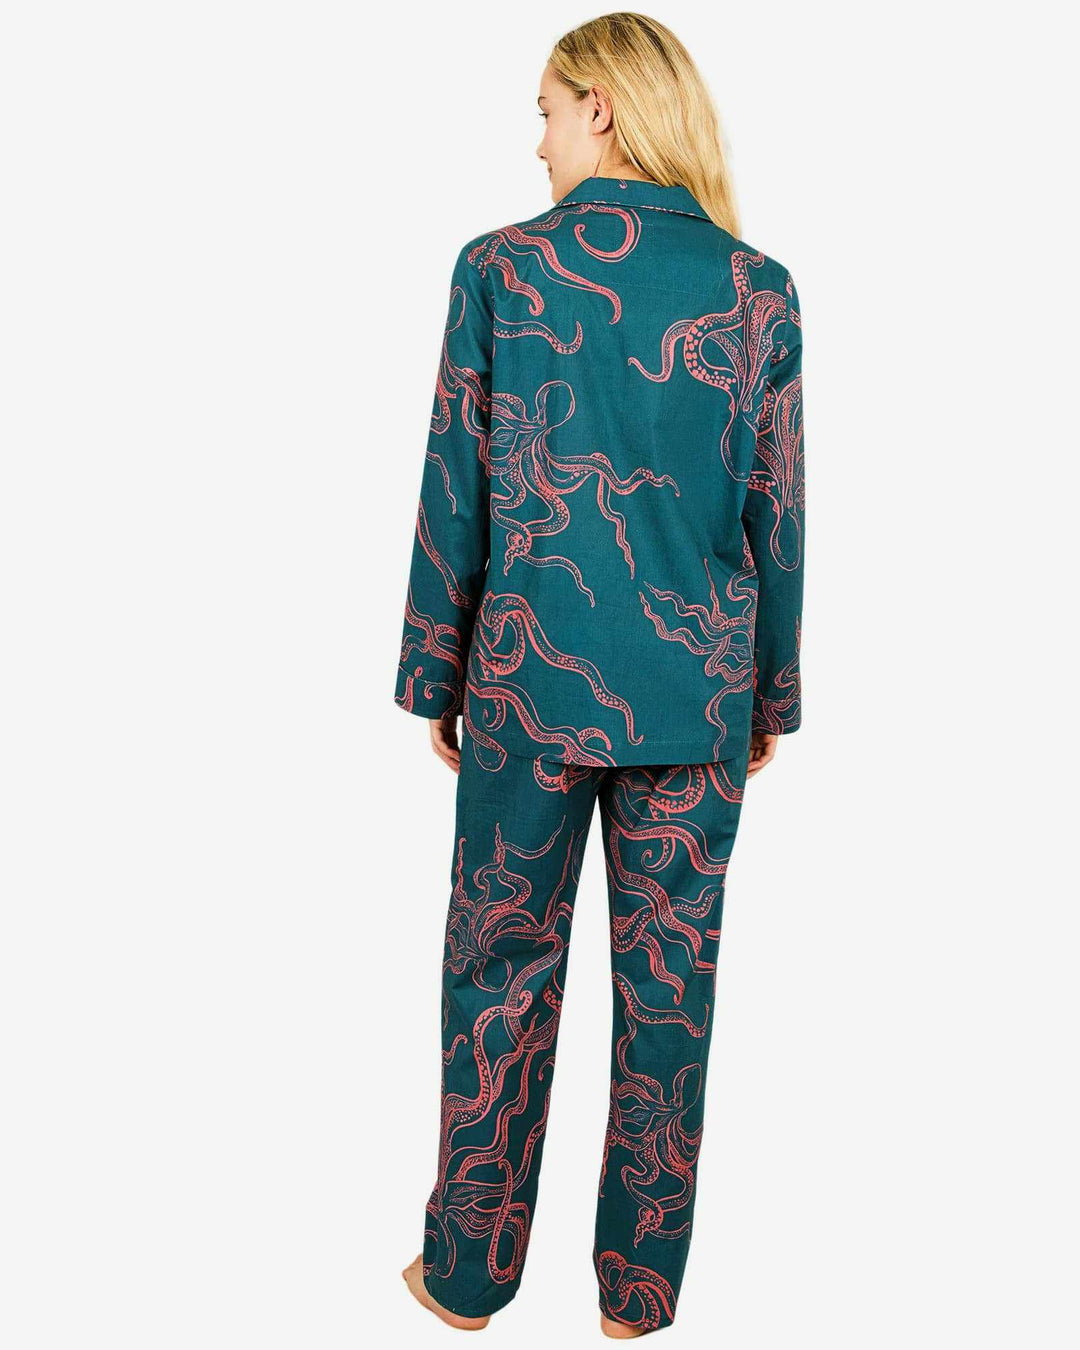 Turquoise matching pyjamas